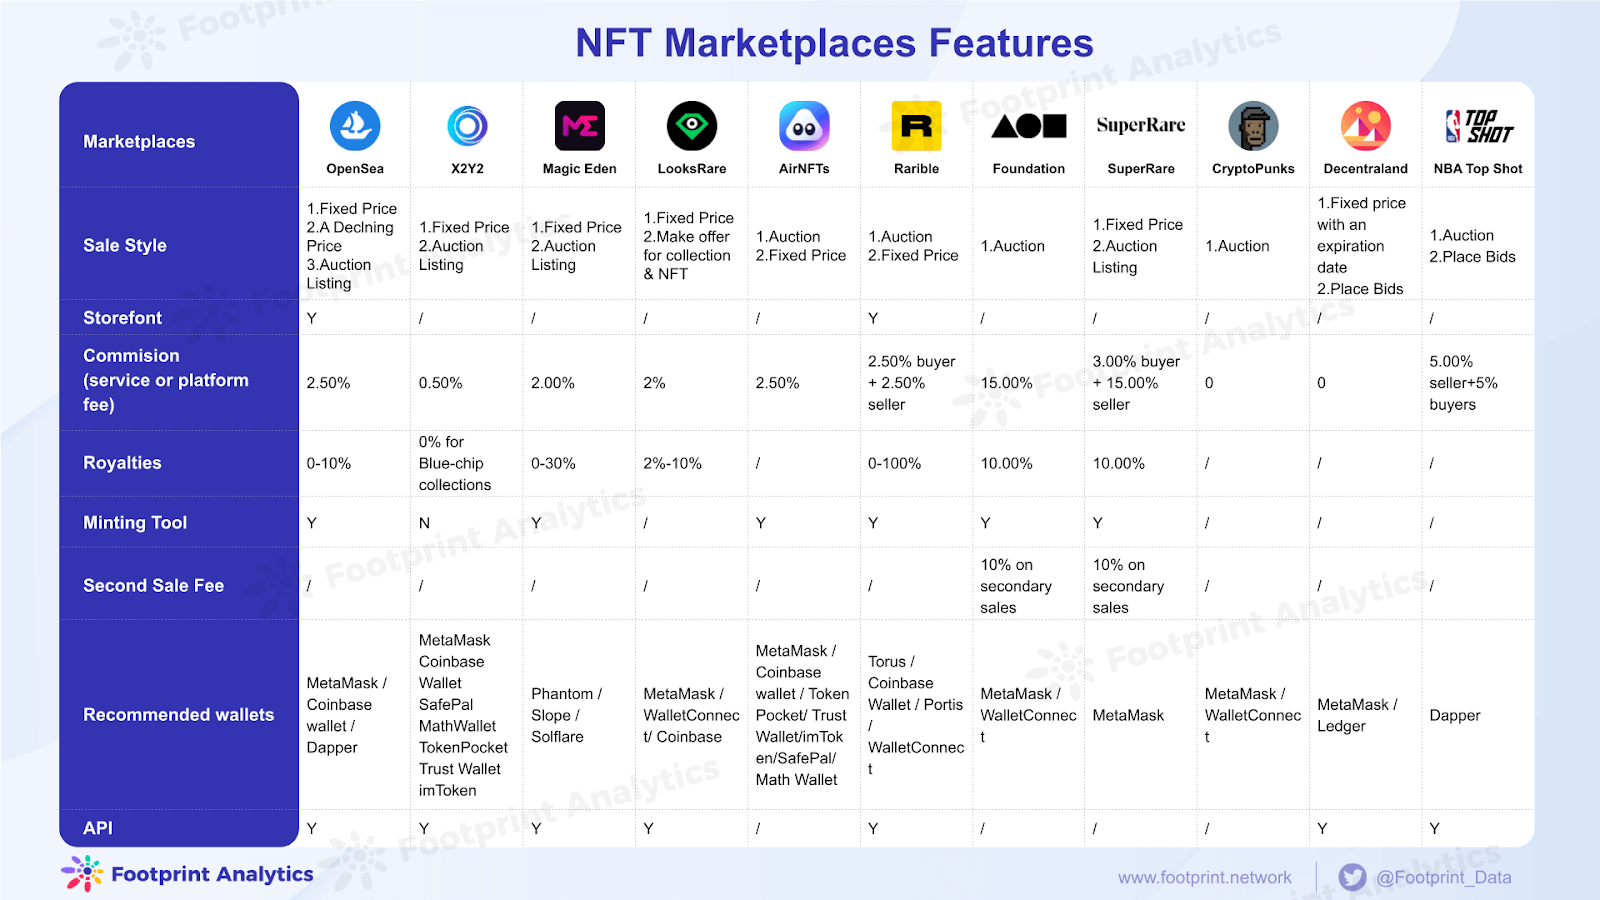 Footprint Analysis - NFT Marketplace Features